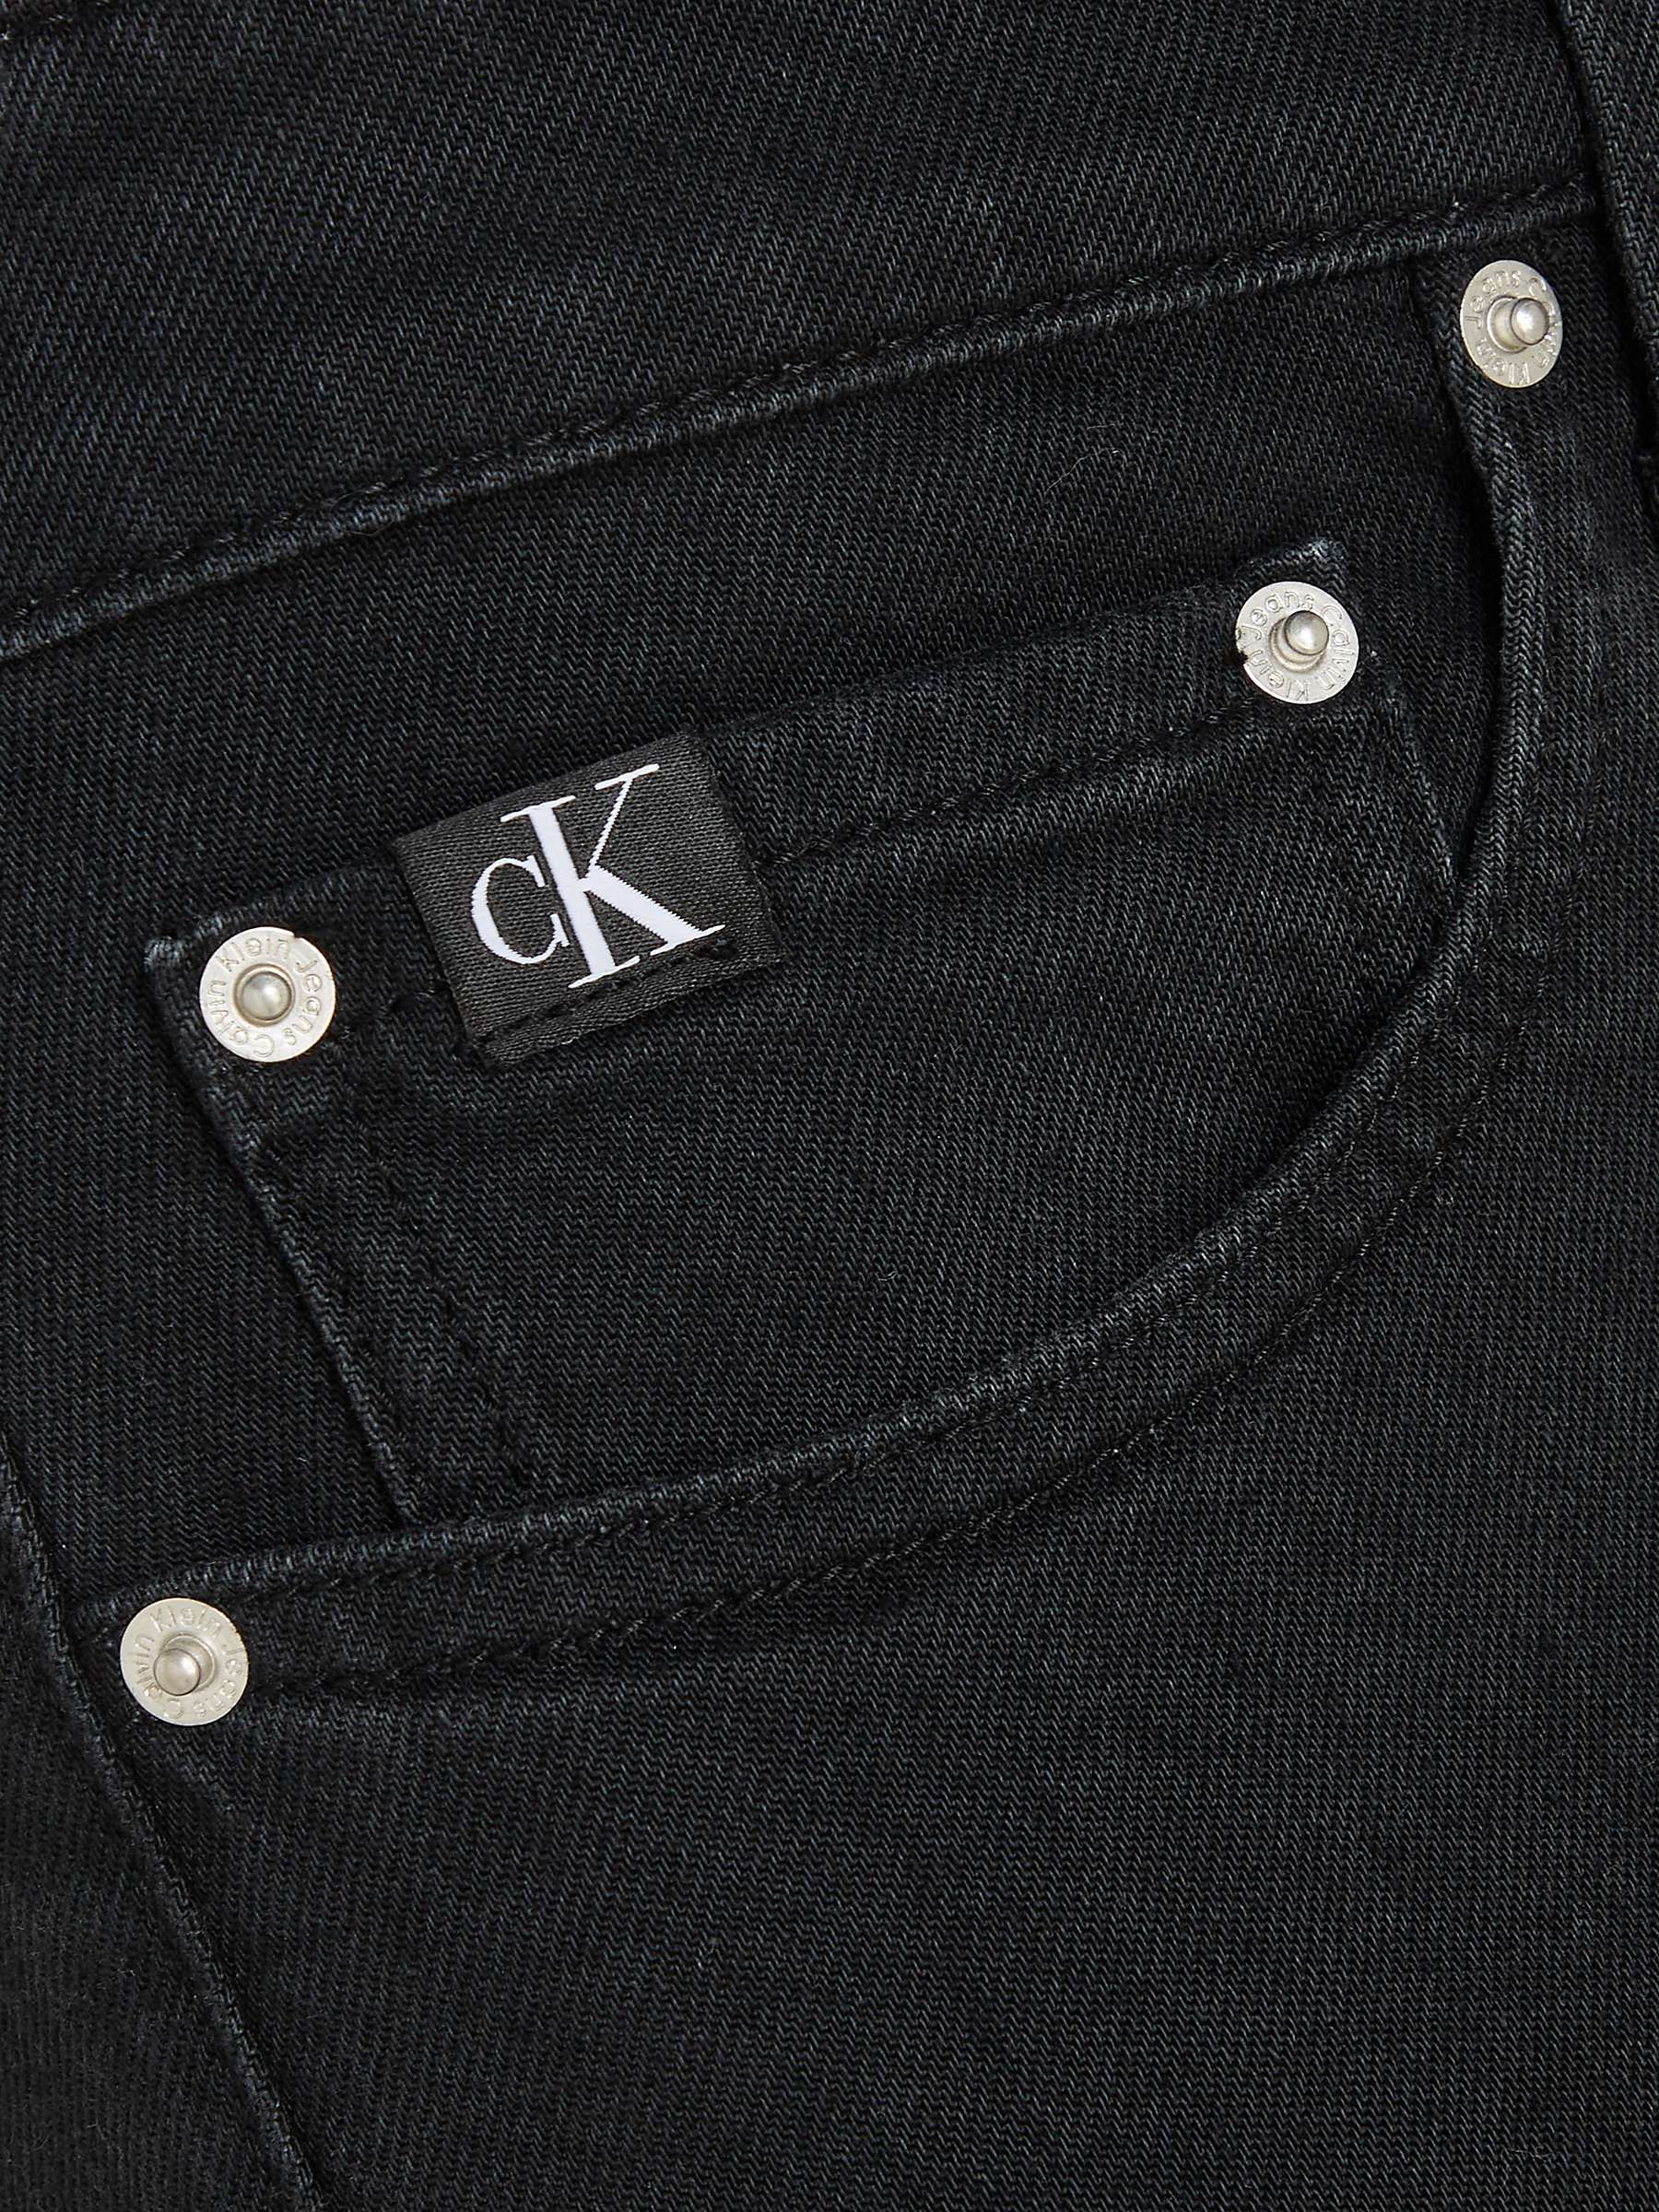 Buy Calvin Klein Slim Fit Jeans Online at johnlewis.com